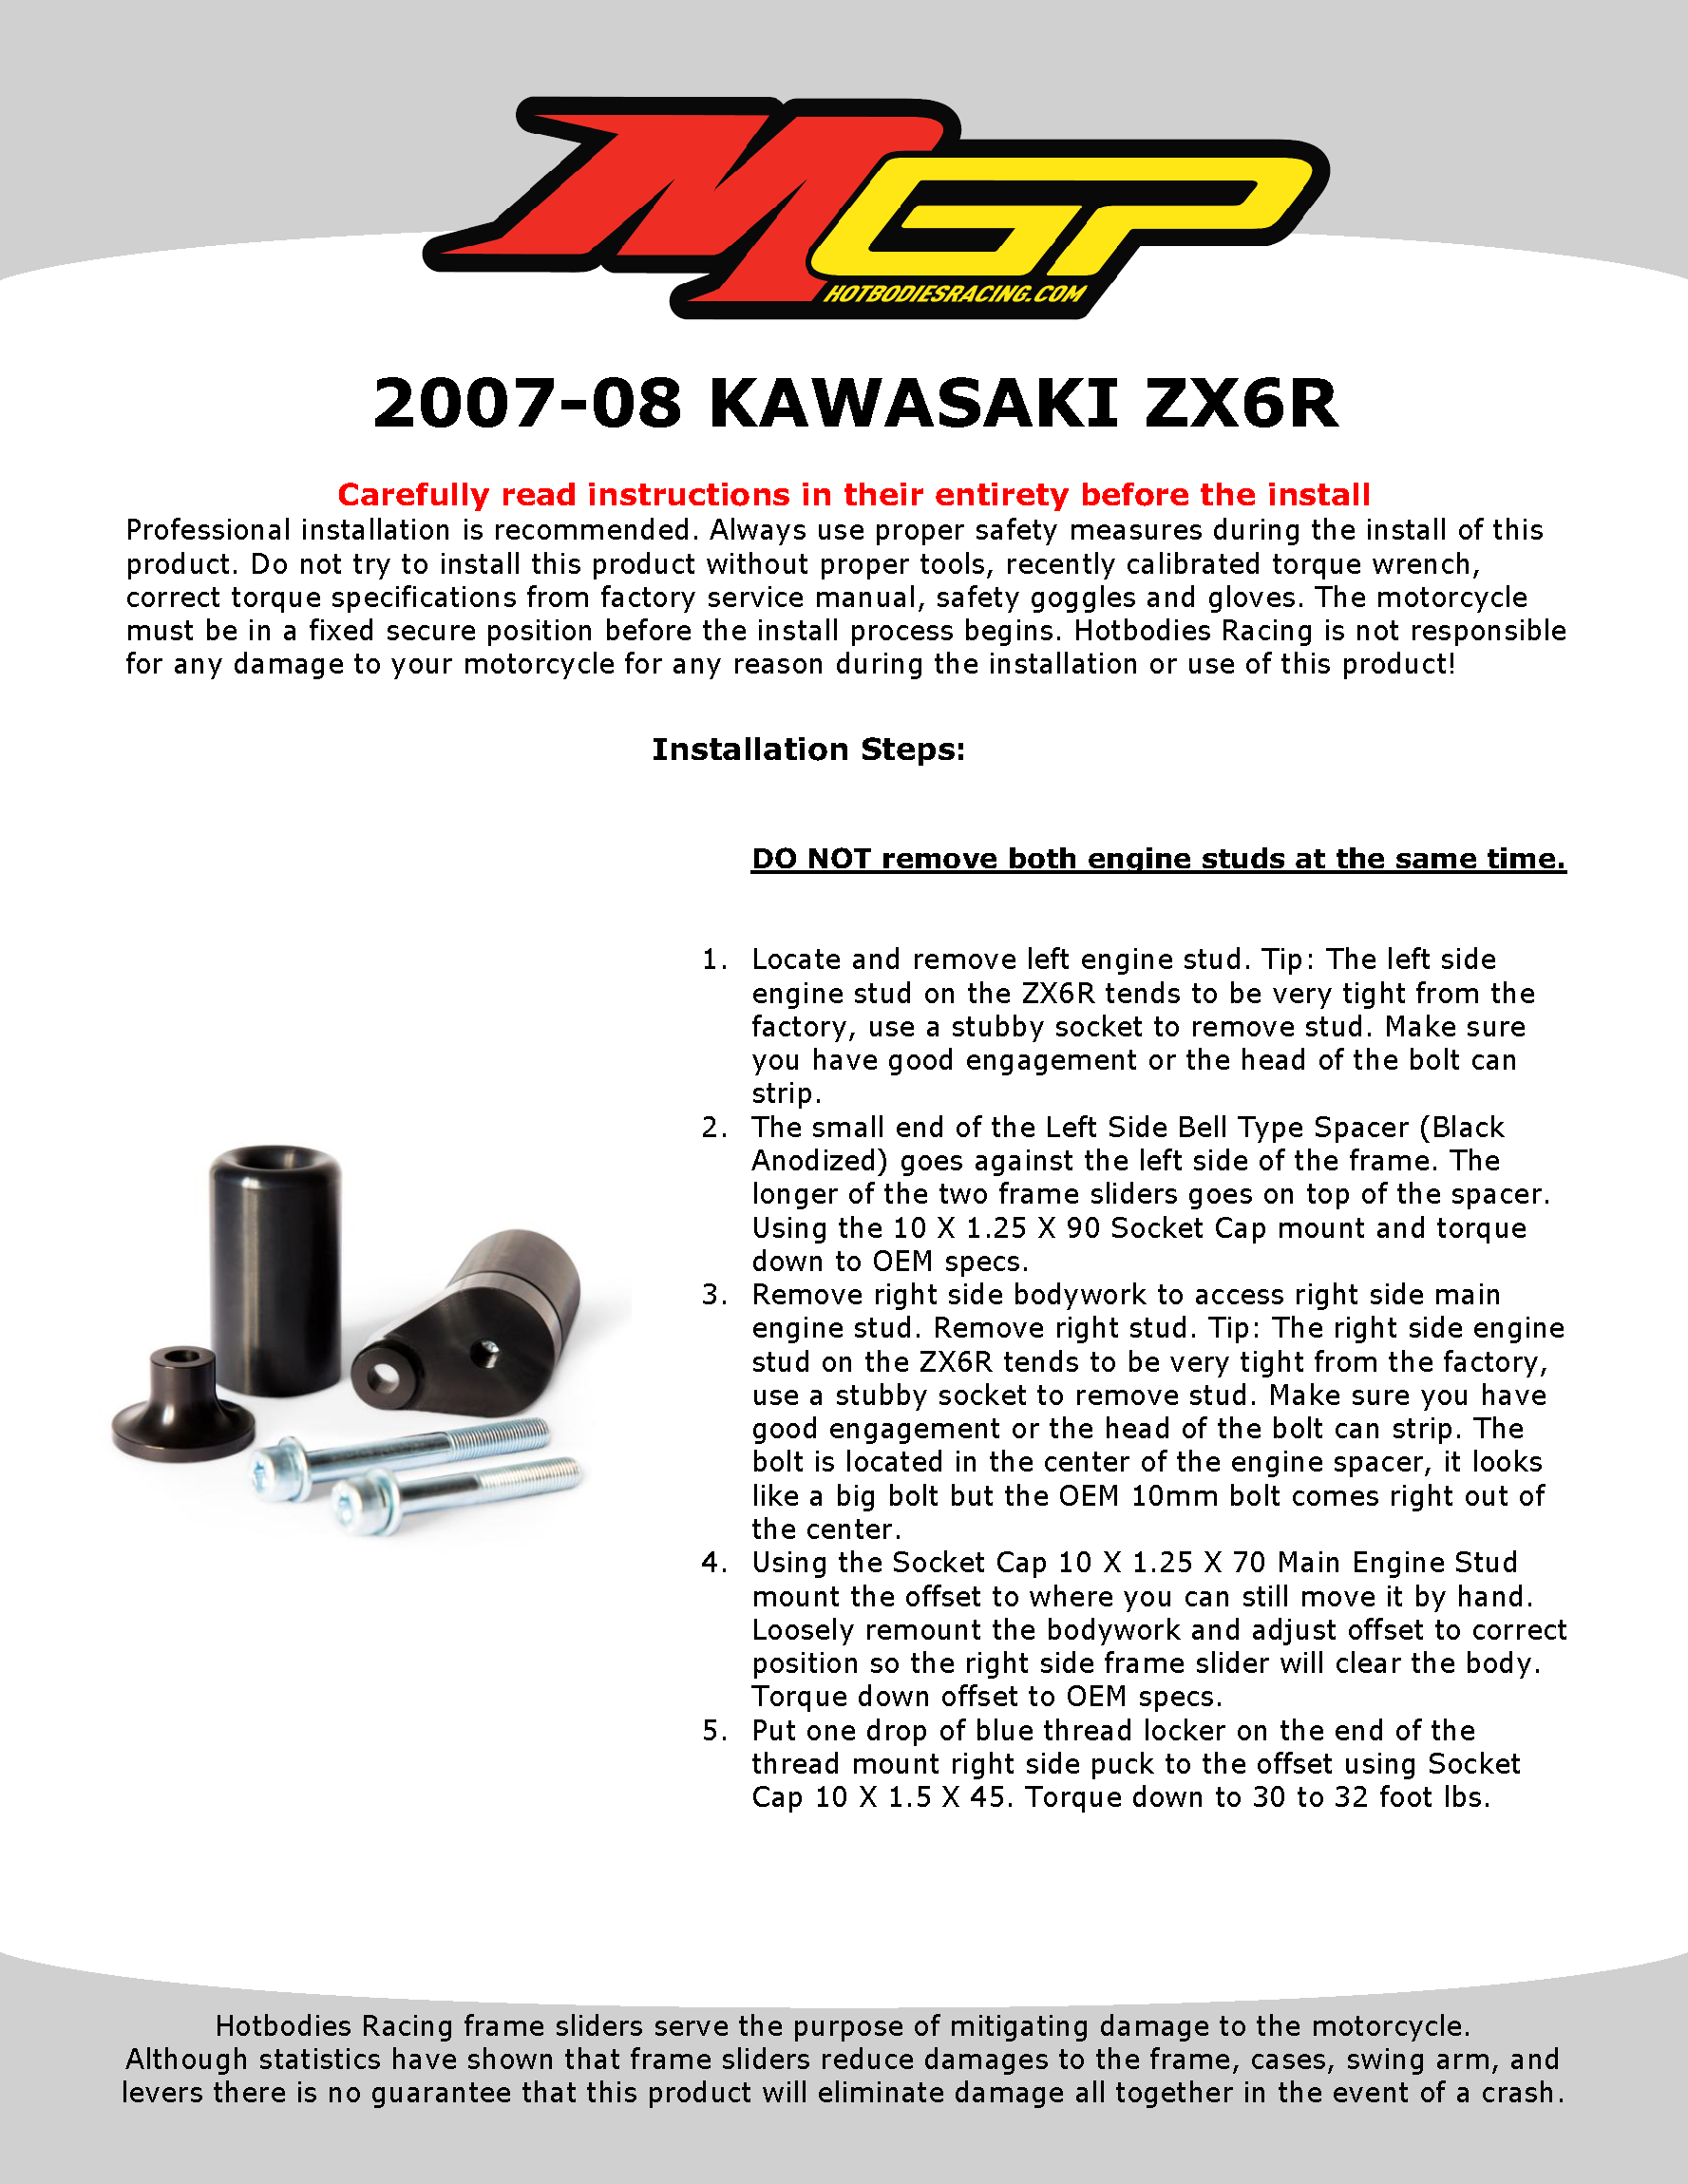 

2007-08 KAWASAKI ZX6R Frame Sliders Installation

